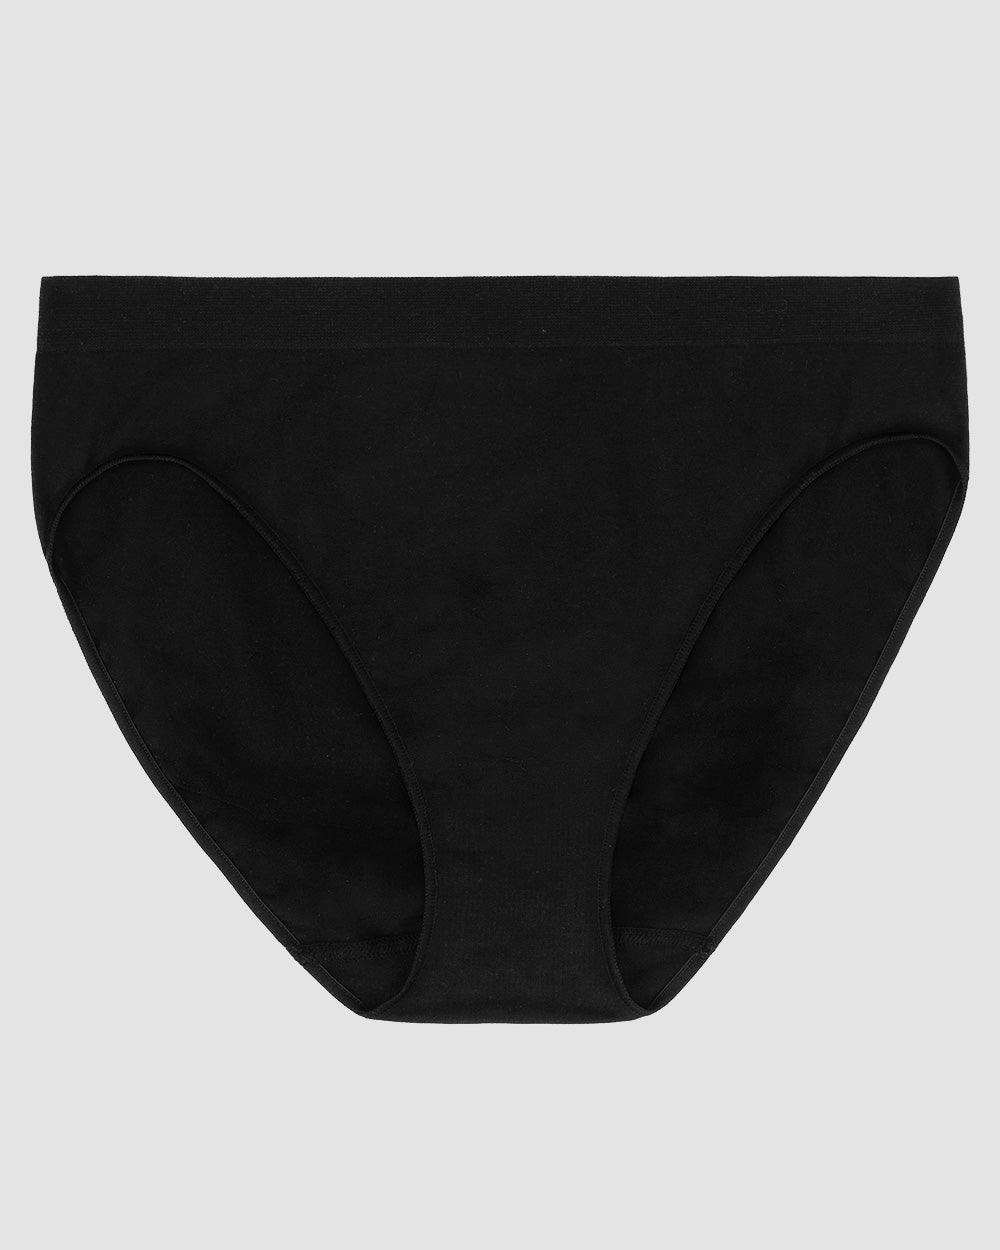 A black Cabana Cotton Seamless Hi Cut Brief Underwear